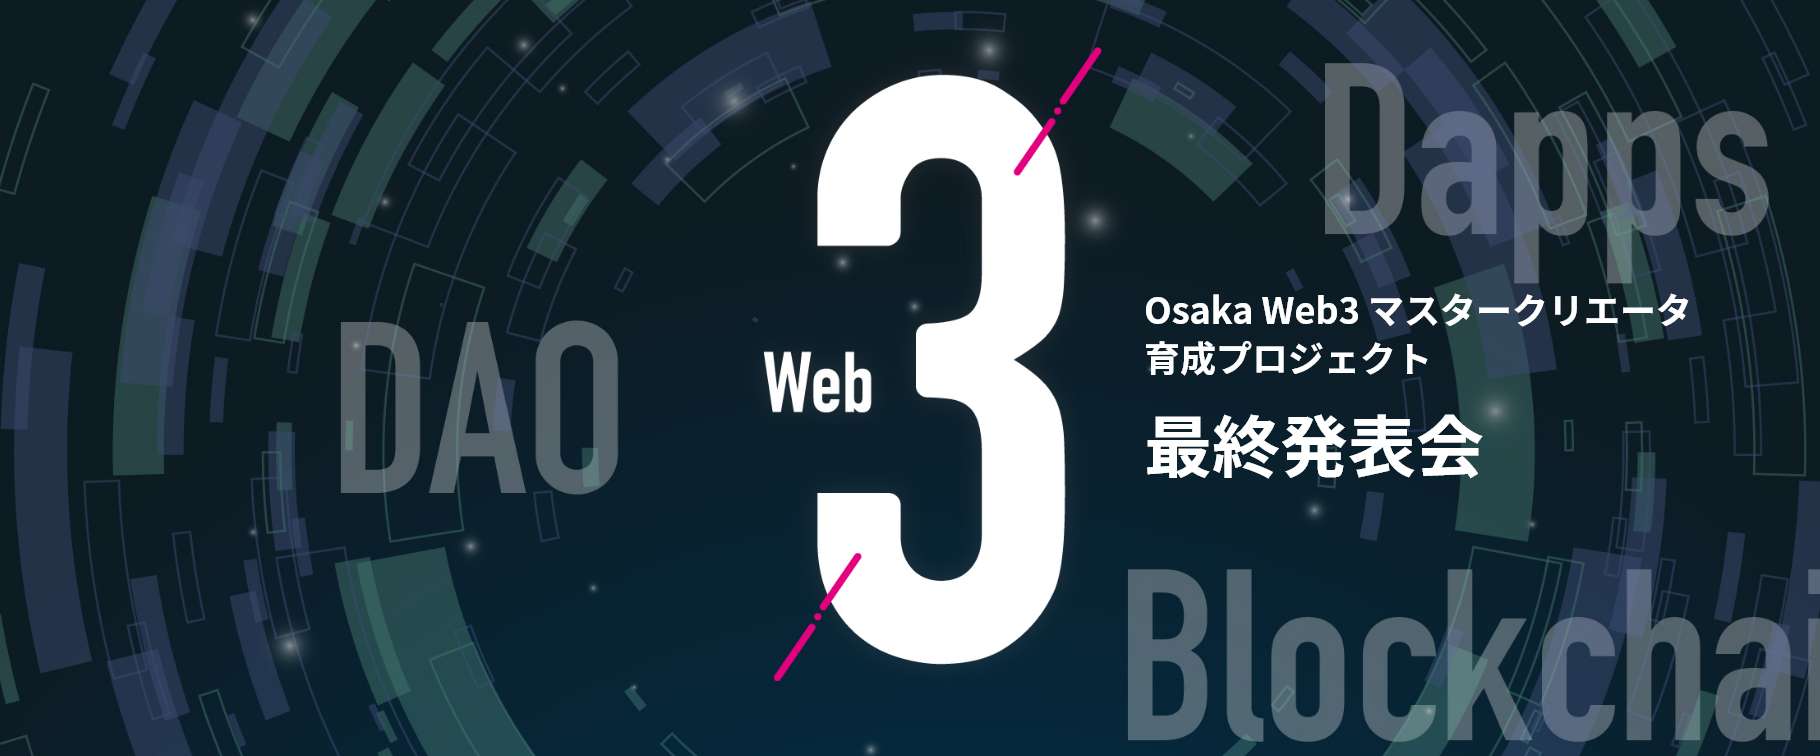 Osaka Web3 マスタークリエータ育成プロジェクト最終発表会